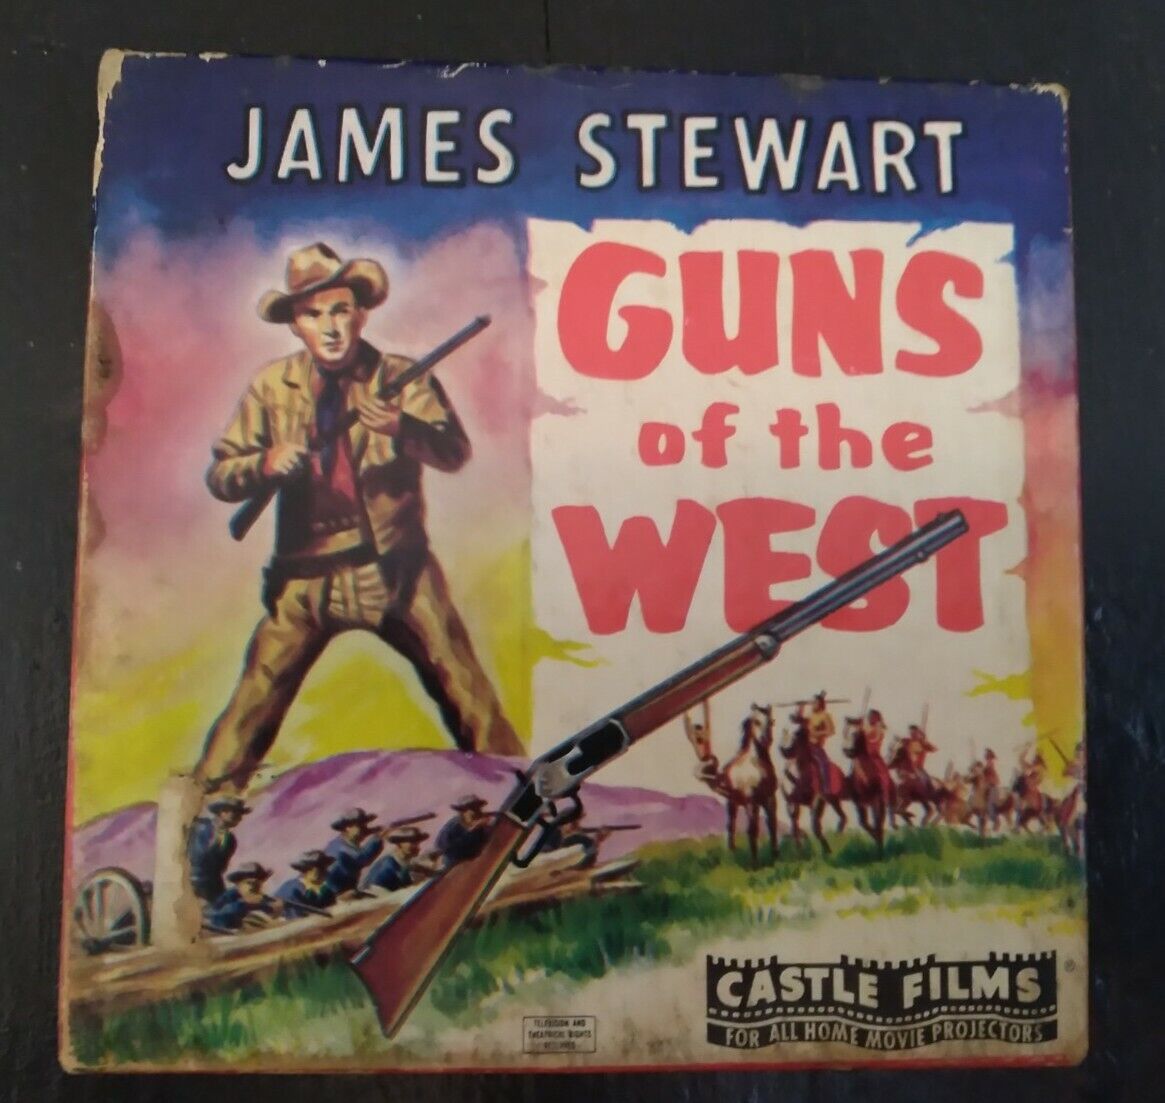 Vintage Guns of the West 8mm Headline (trailer) James Stewart Castle Films